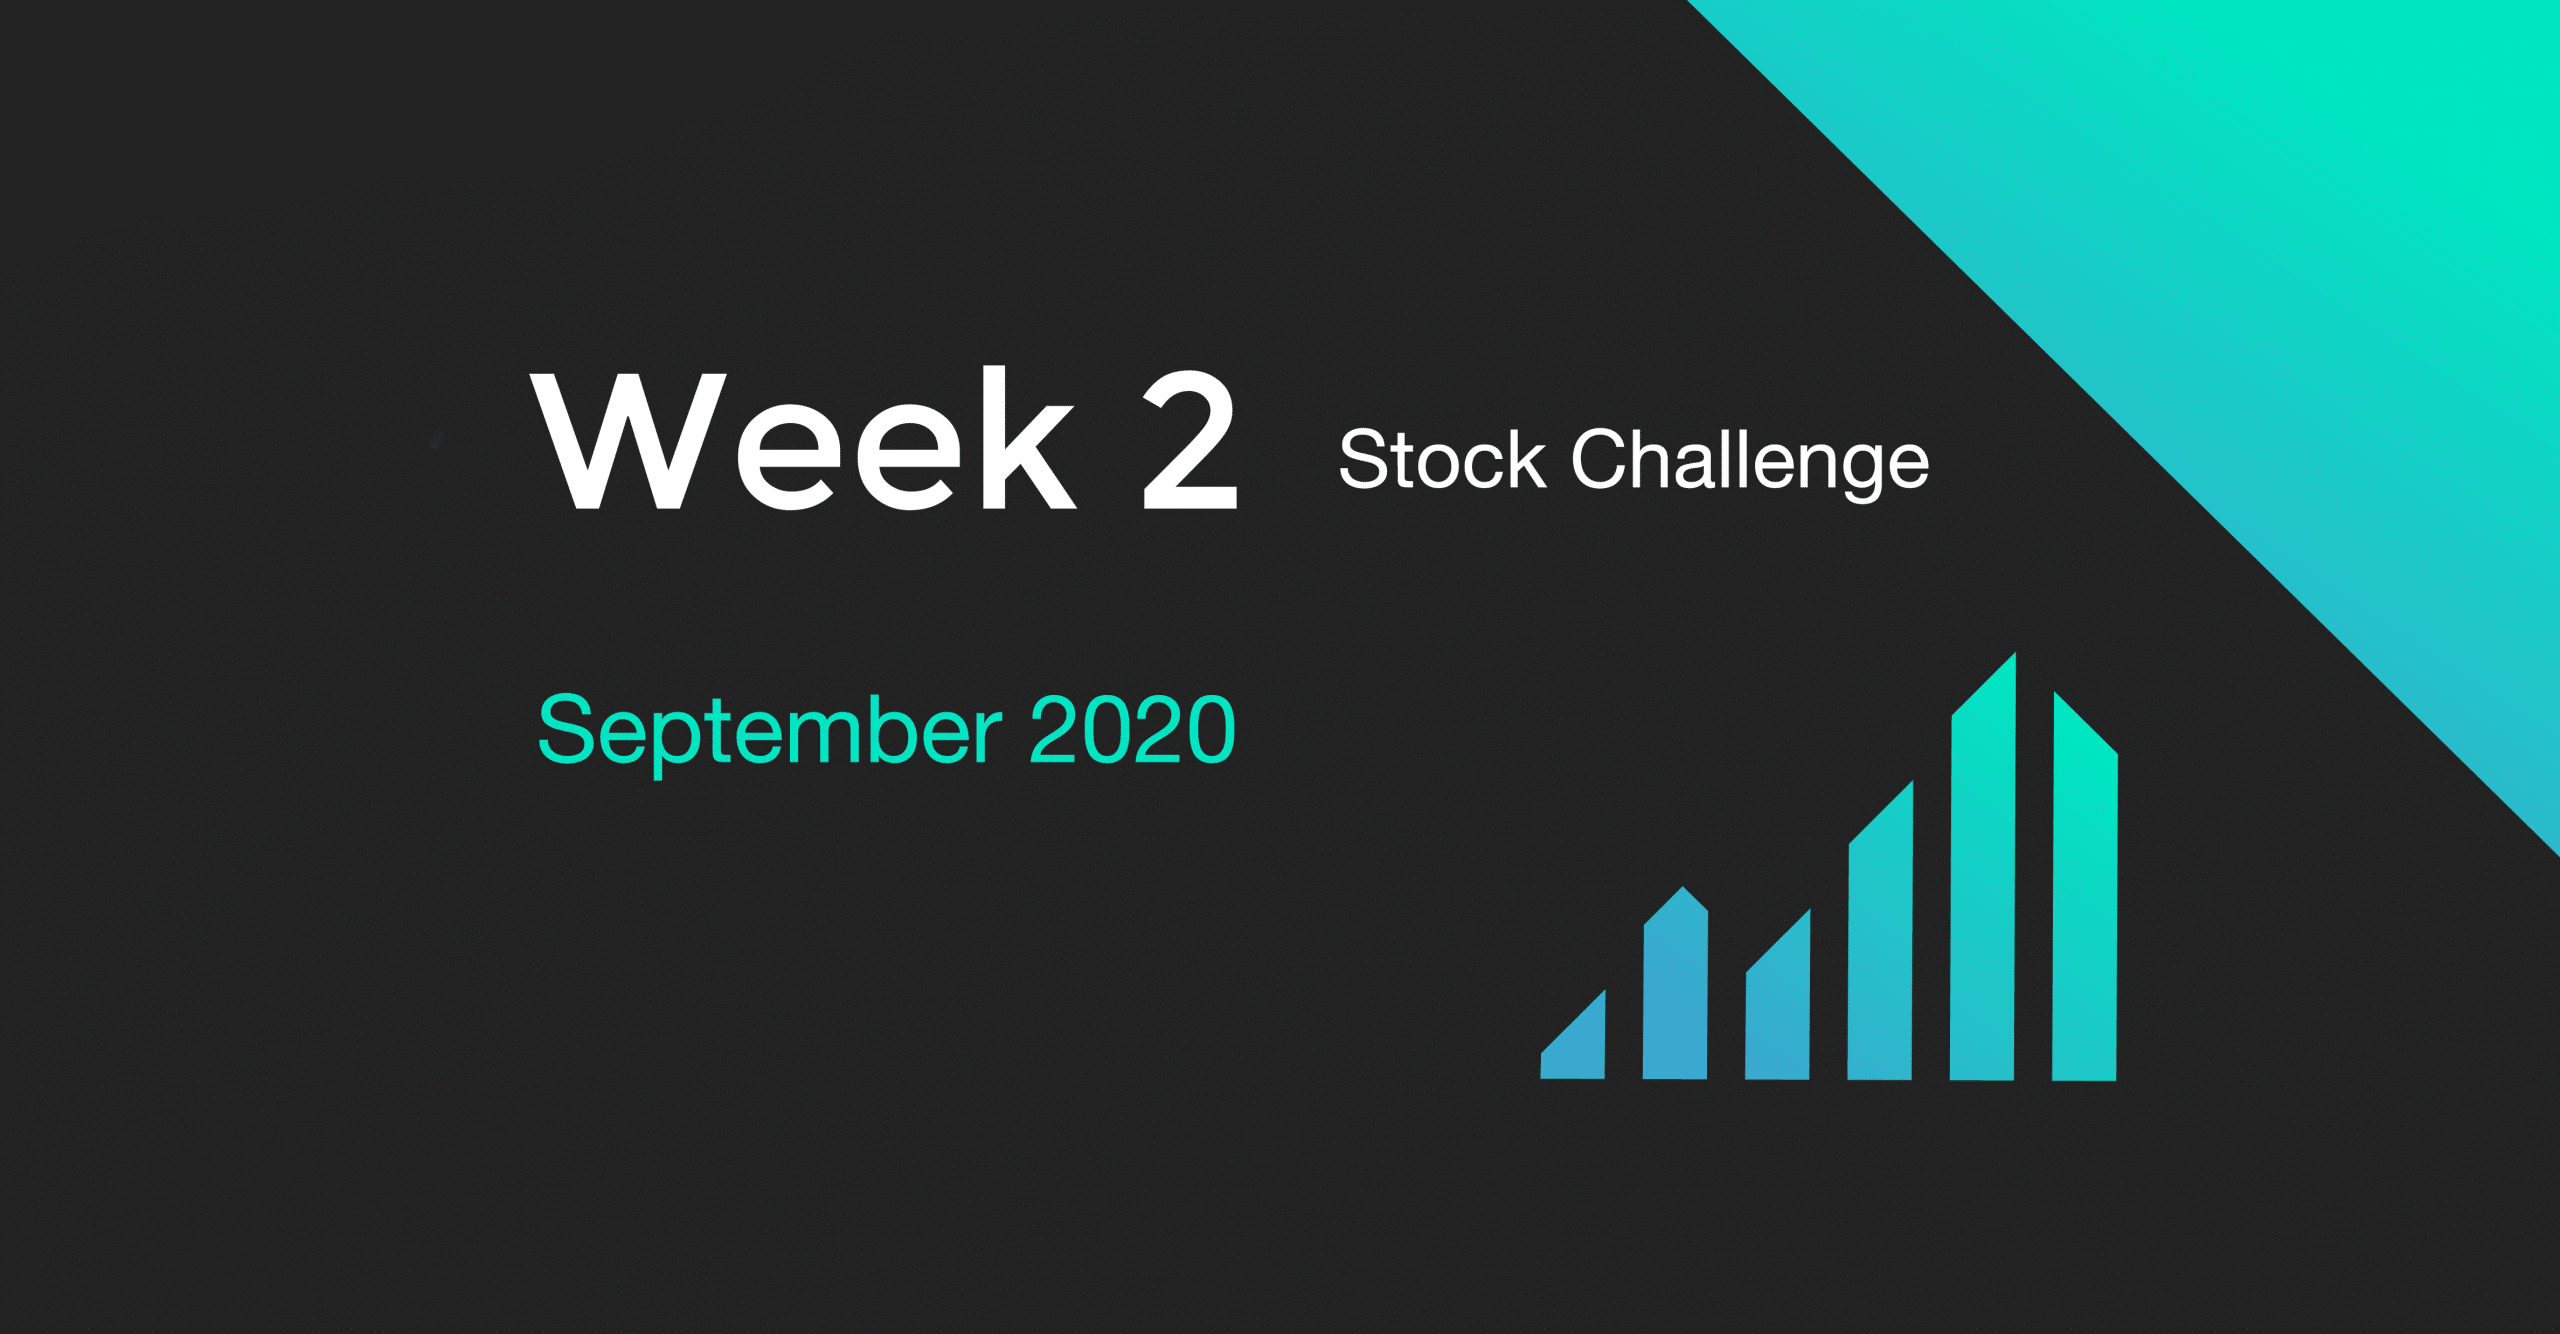 Week 2 of the September 2020 Stock Challenge